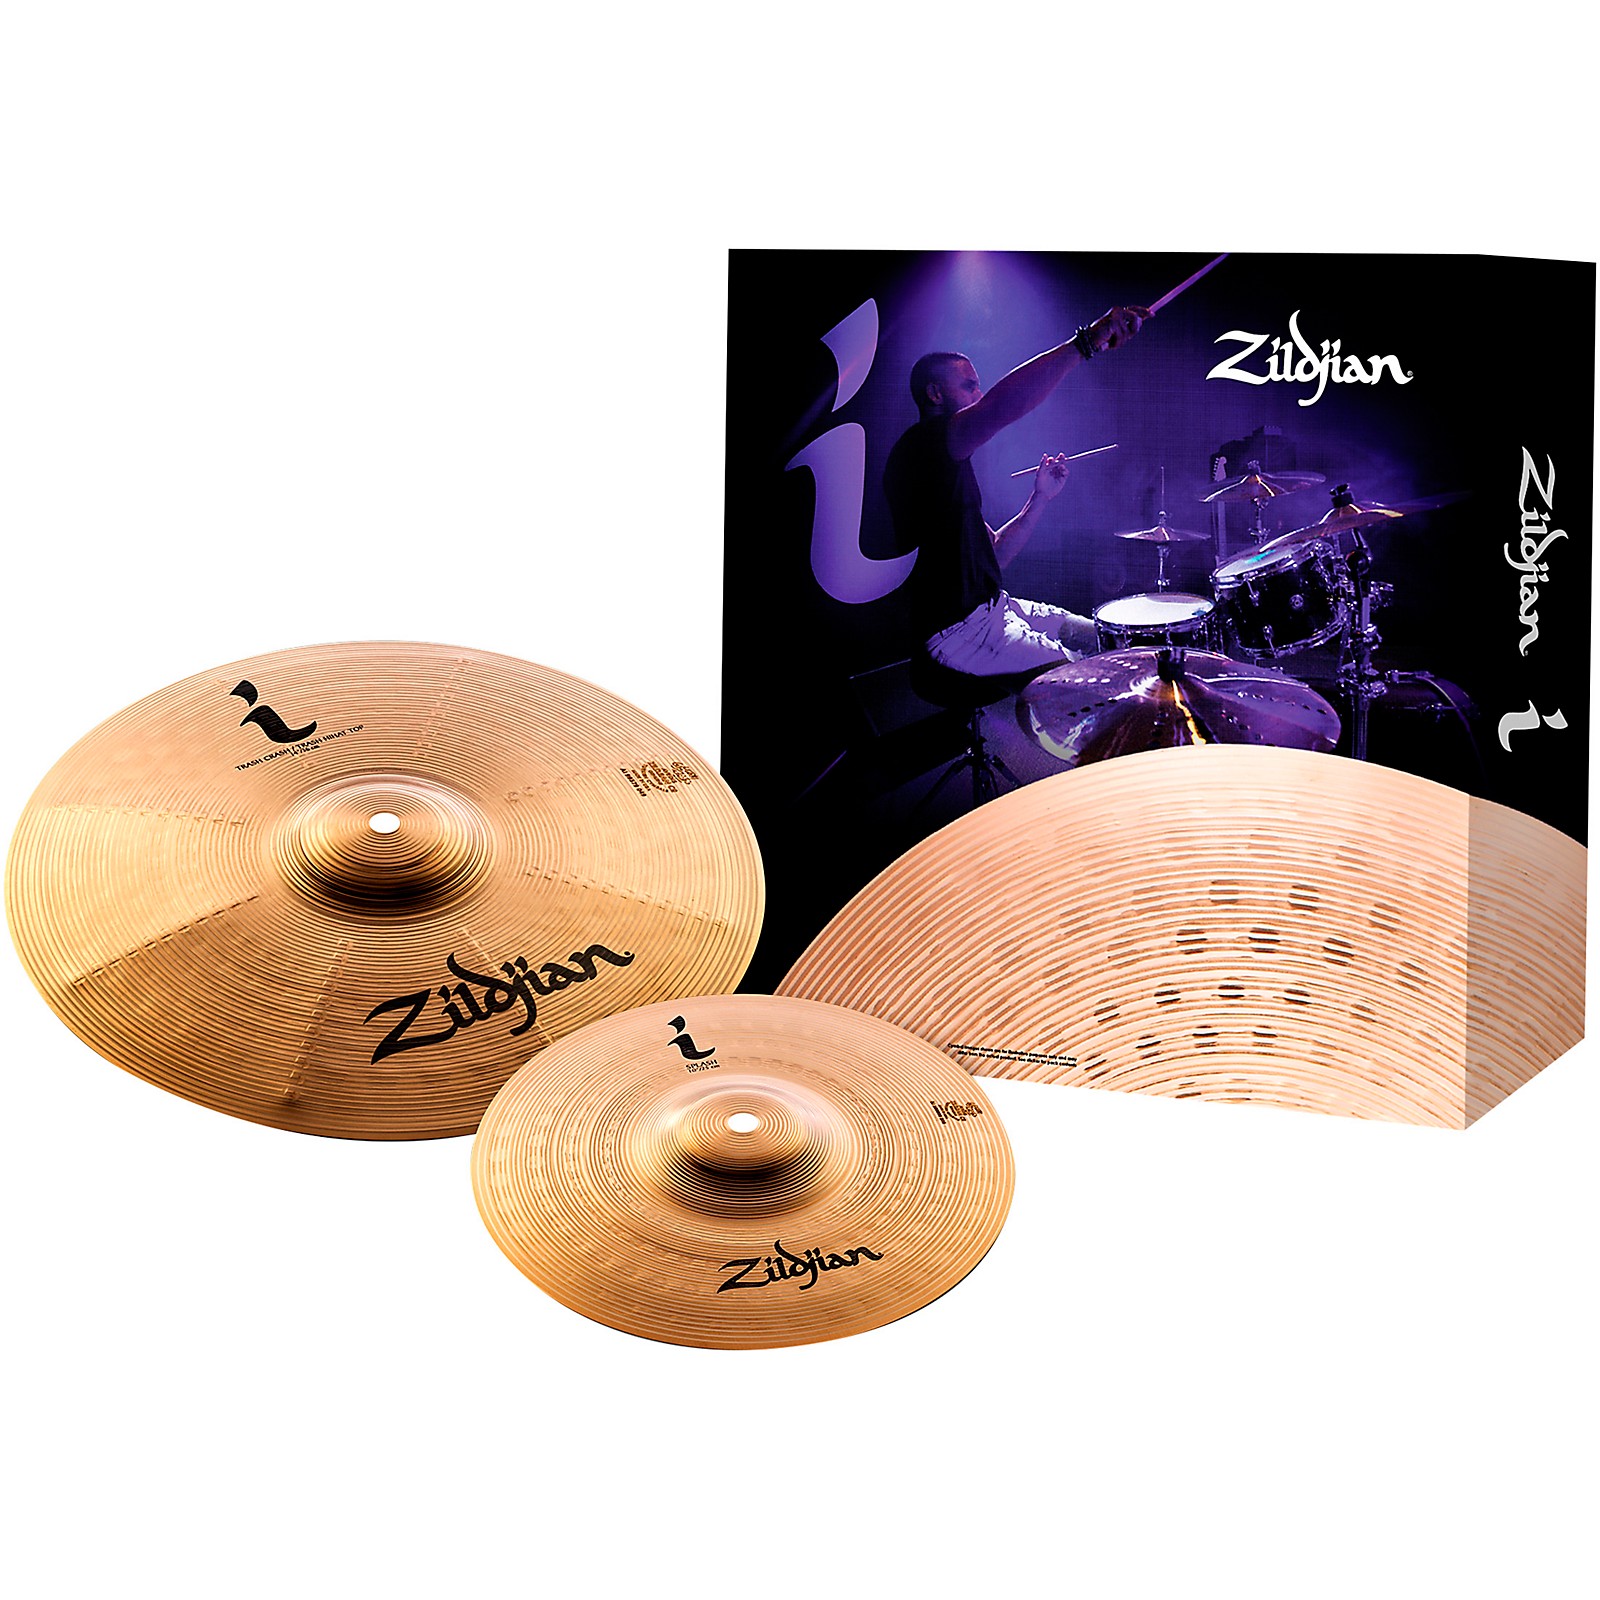 Zildjian I Series Expression Cymbal Pack 1A Guitar Center